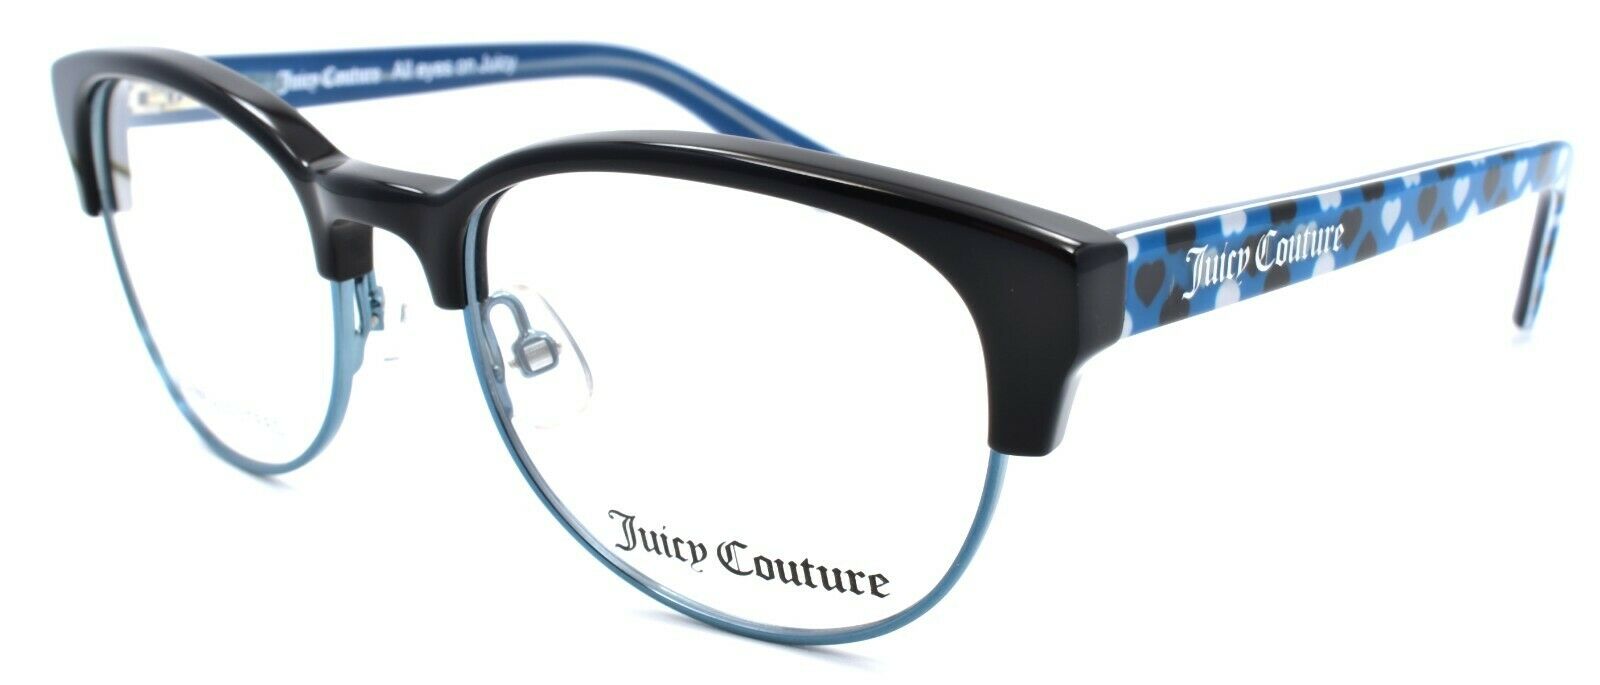 1-Juicy Couture JU928 ETJ Girls Eyeglasses Frames 45-16-120 Black / Teal w/ Hearts-762753165688-IKSpecs